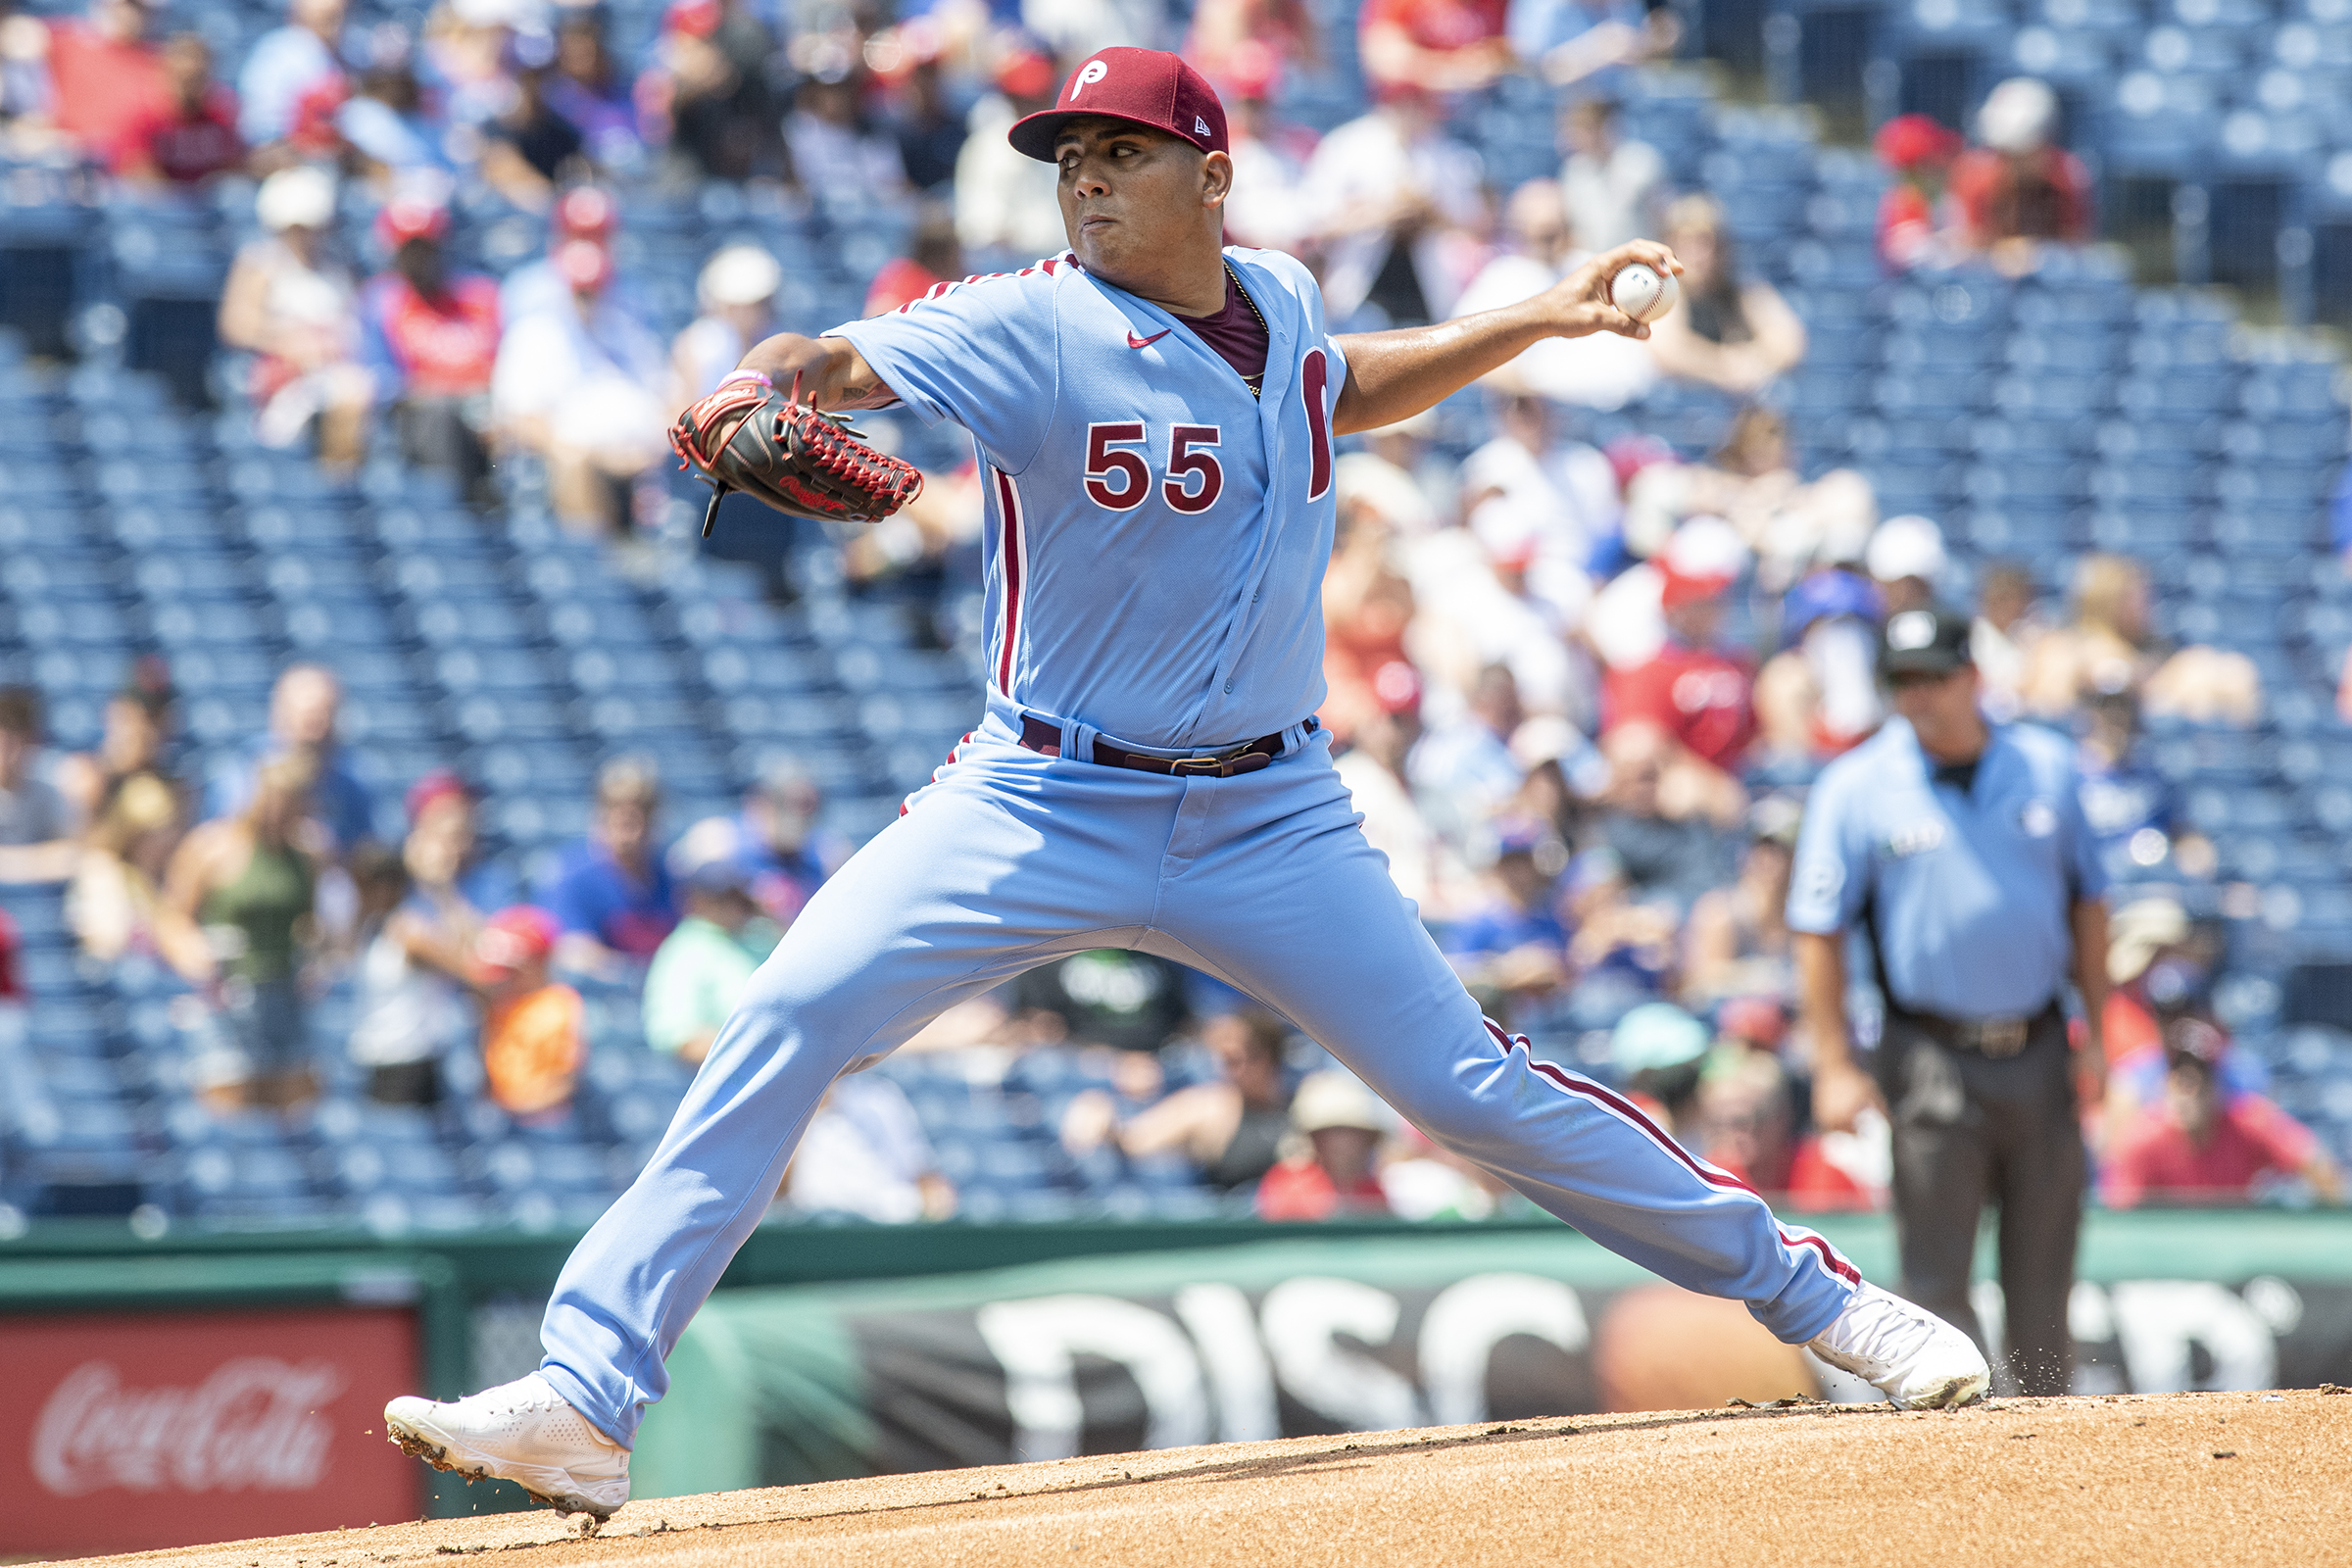 Ranger Suárez has been a 'savior' for the Phillies as he keeps